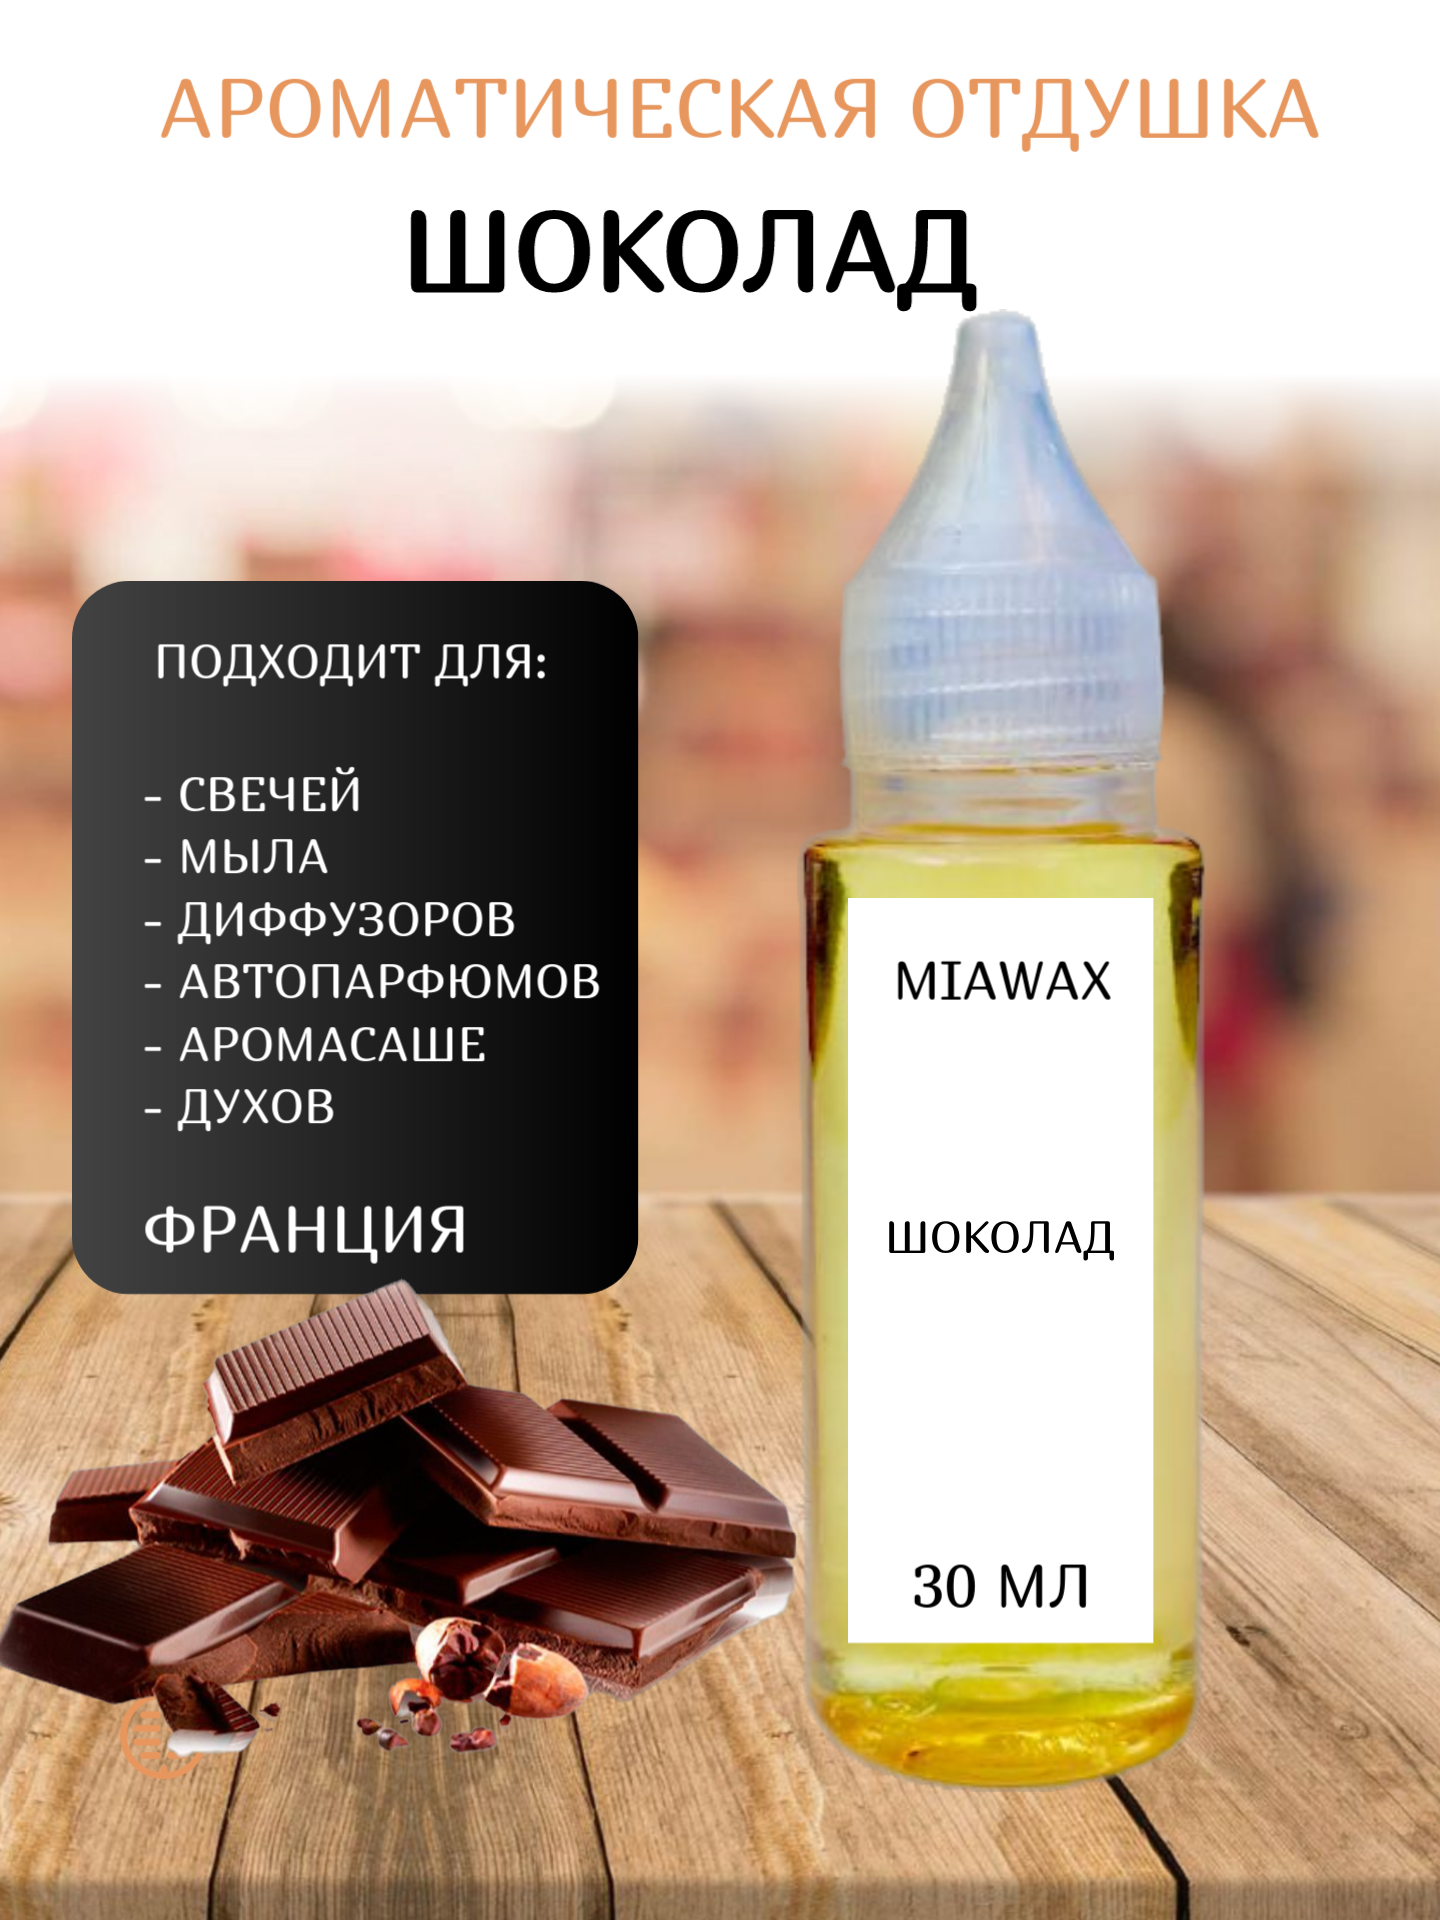 Отдушка MIAWAX Шоколад, 30 мл